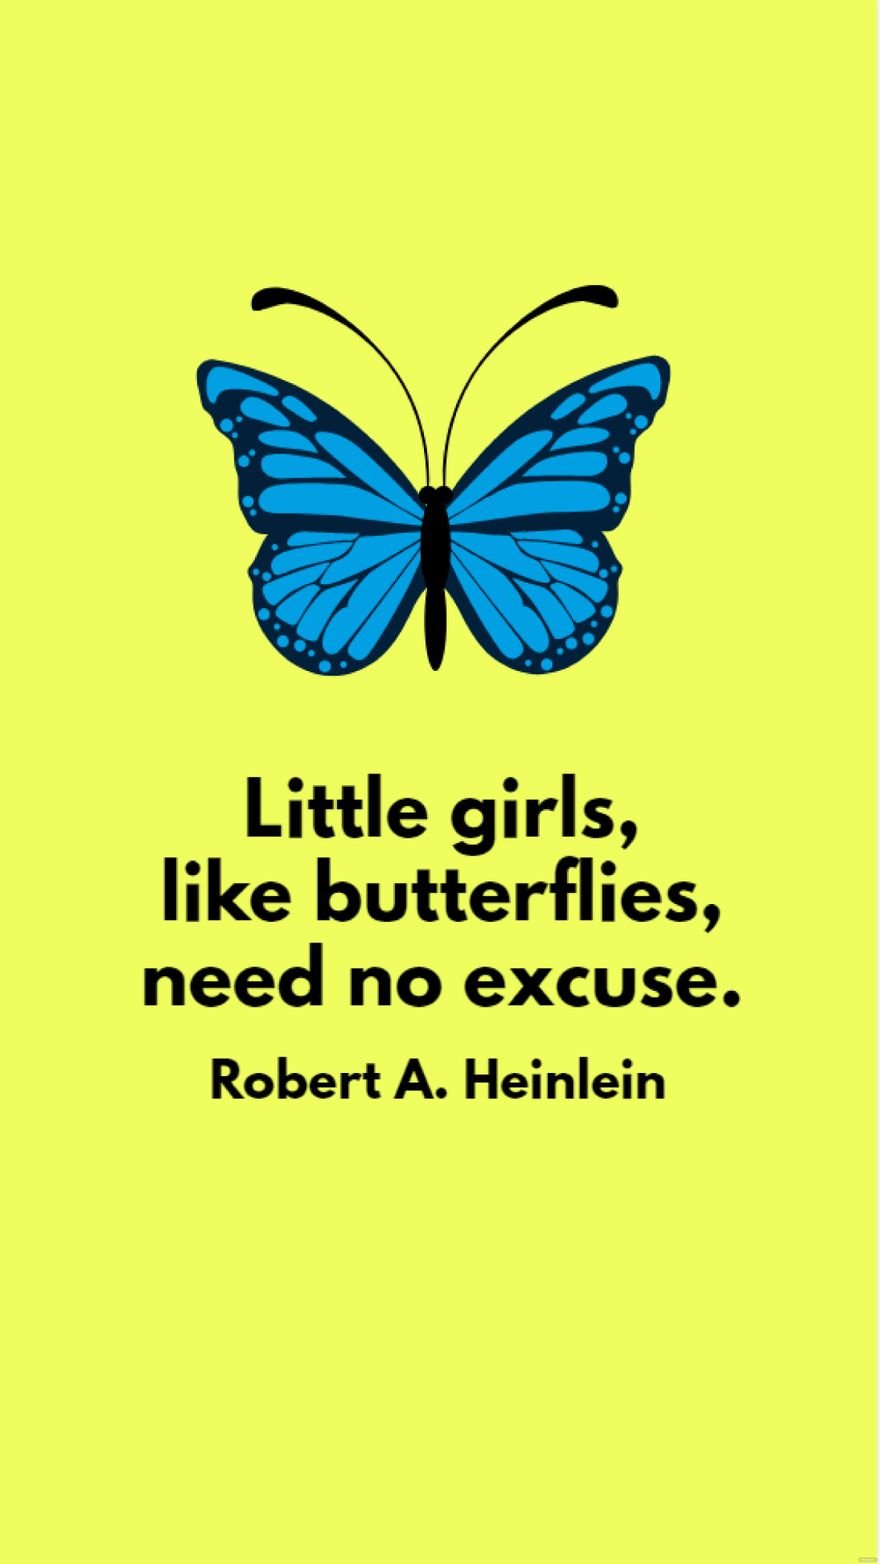 Free Robert A. Heinlein - Little girls, like butterflies, need no excuse. in JPG